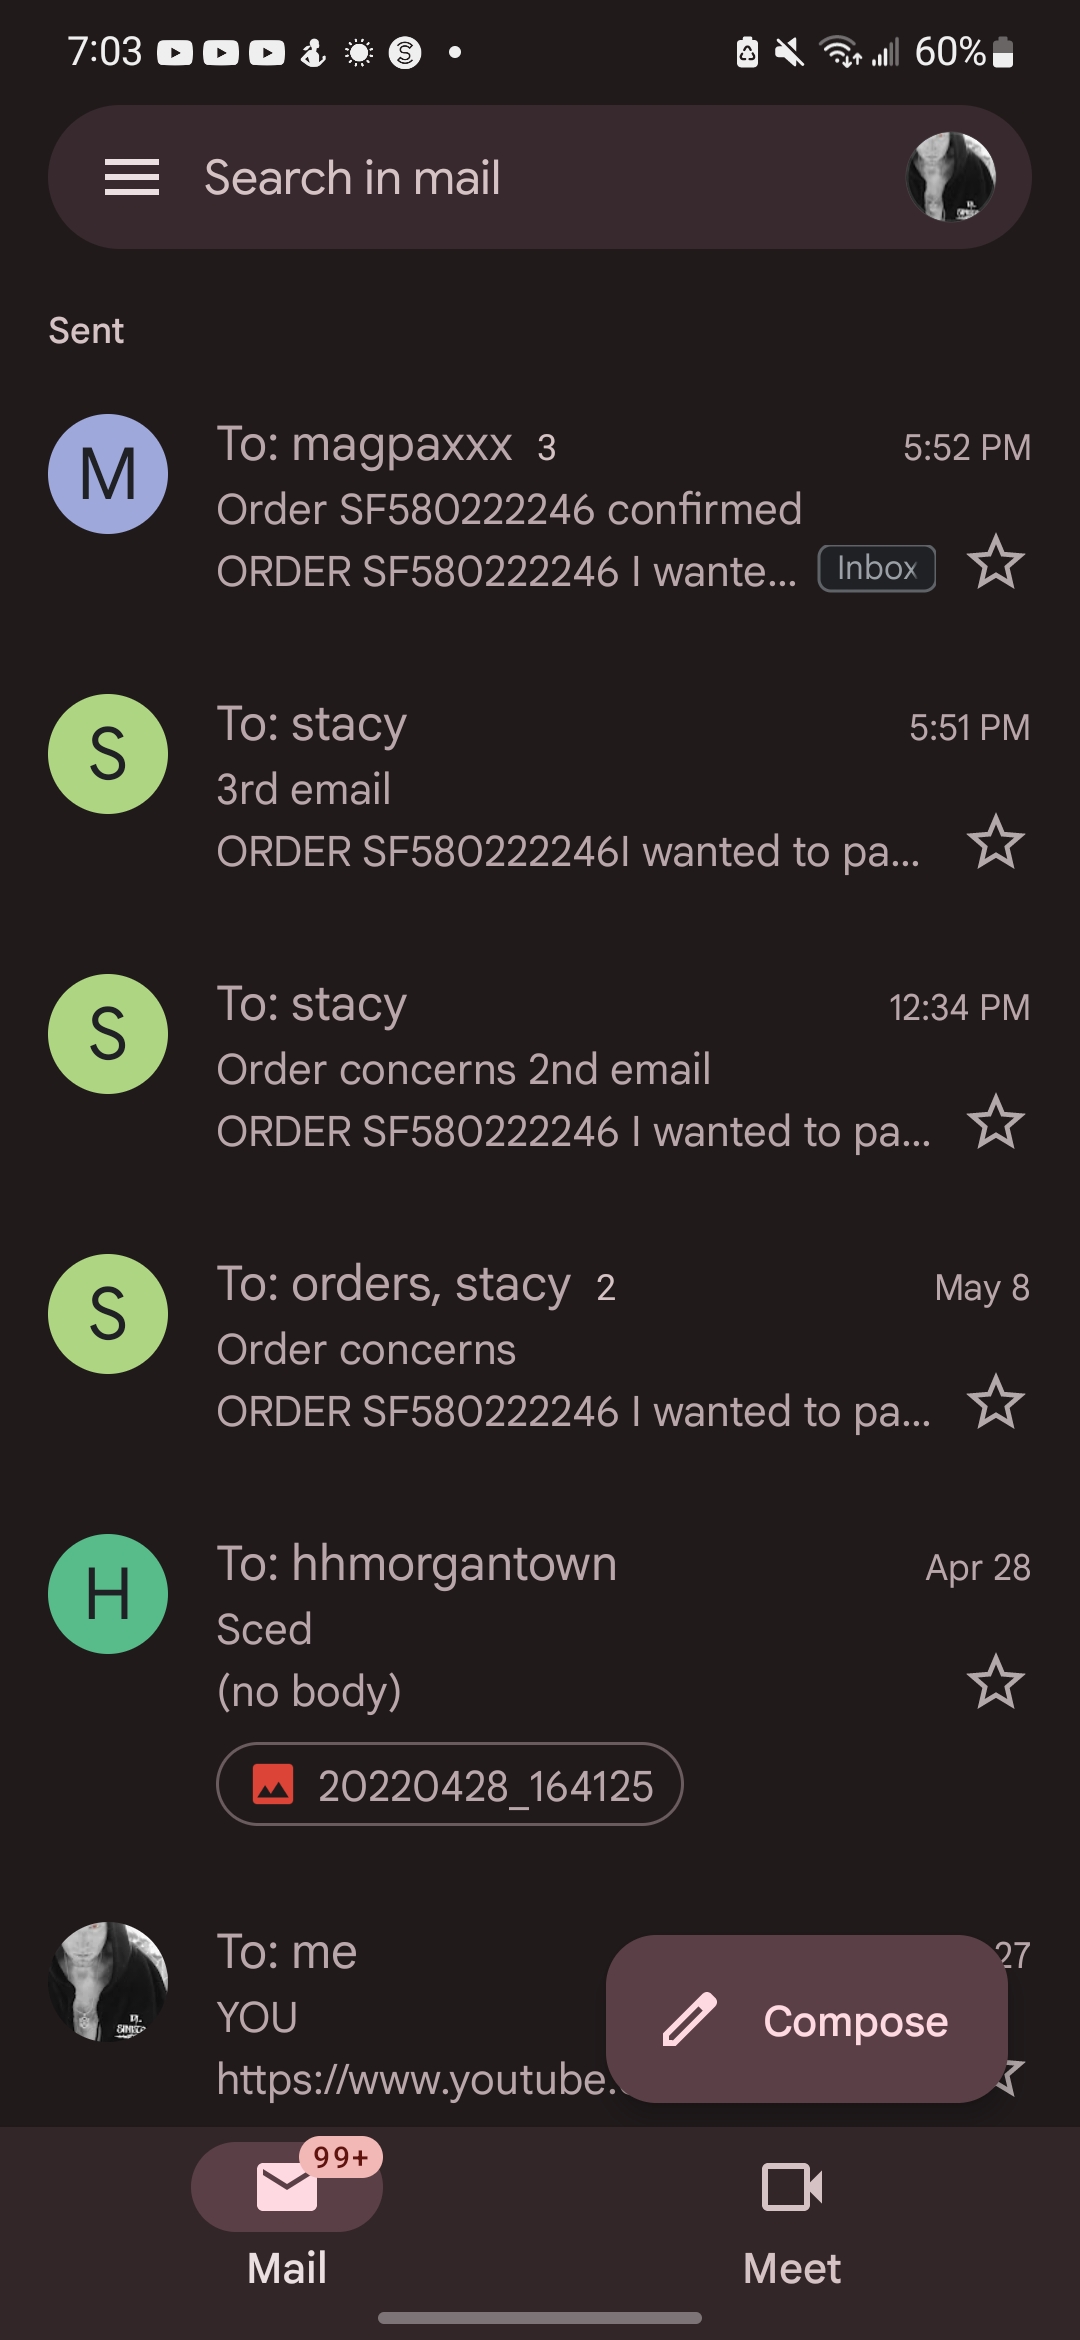 The multiple emails I sent